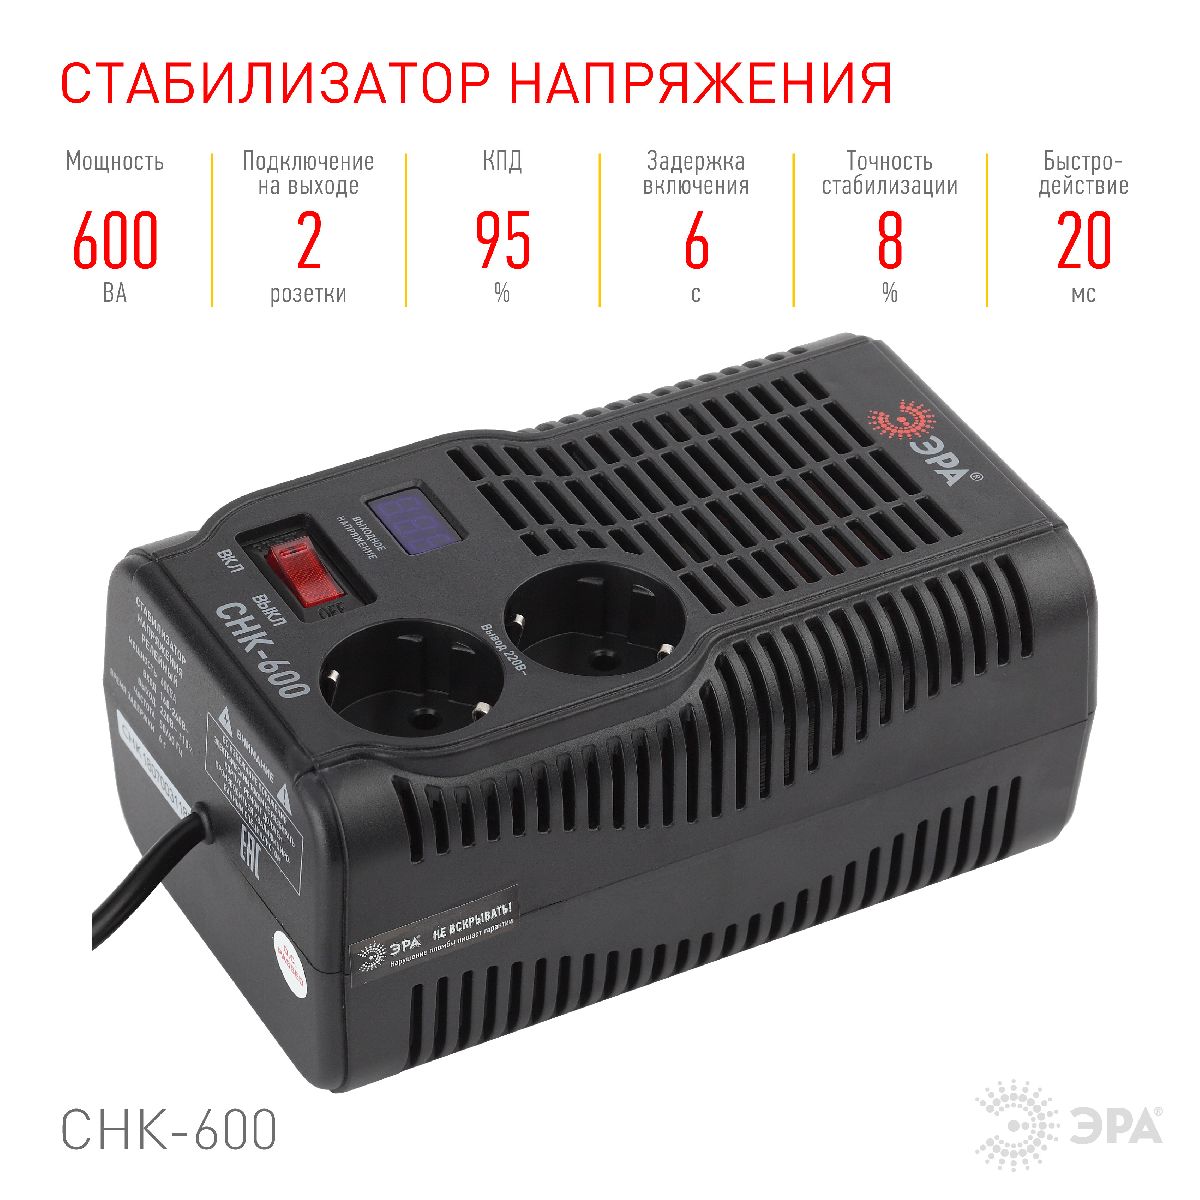 Стабилизатор Эра СНК-600 Б0032468